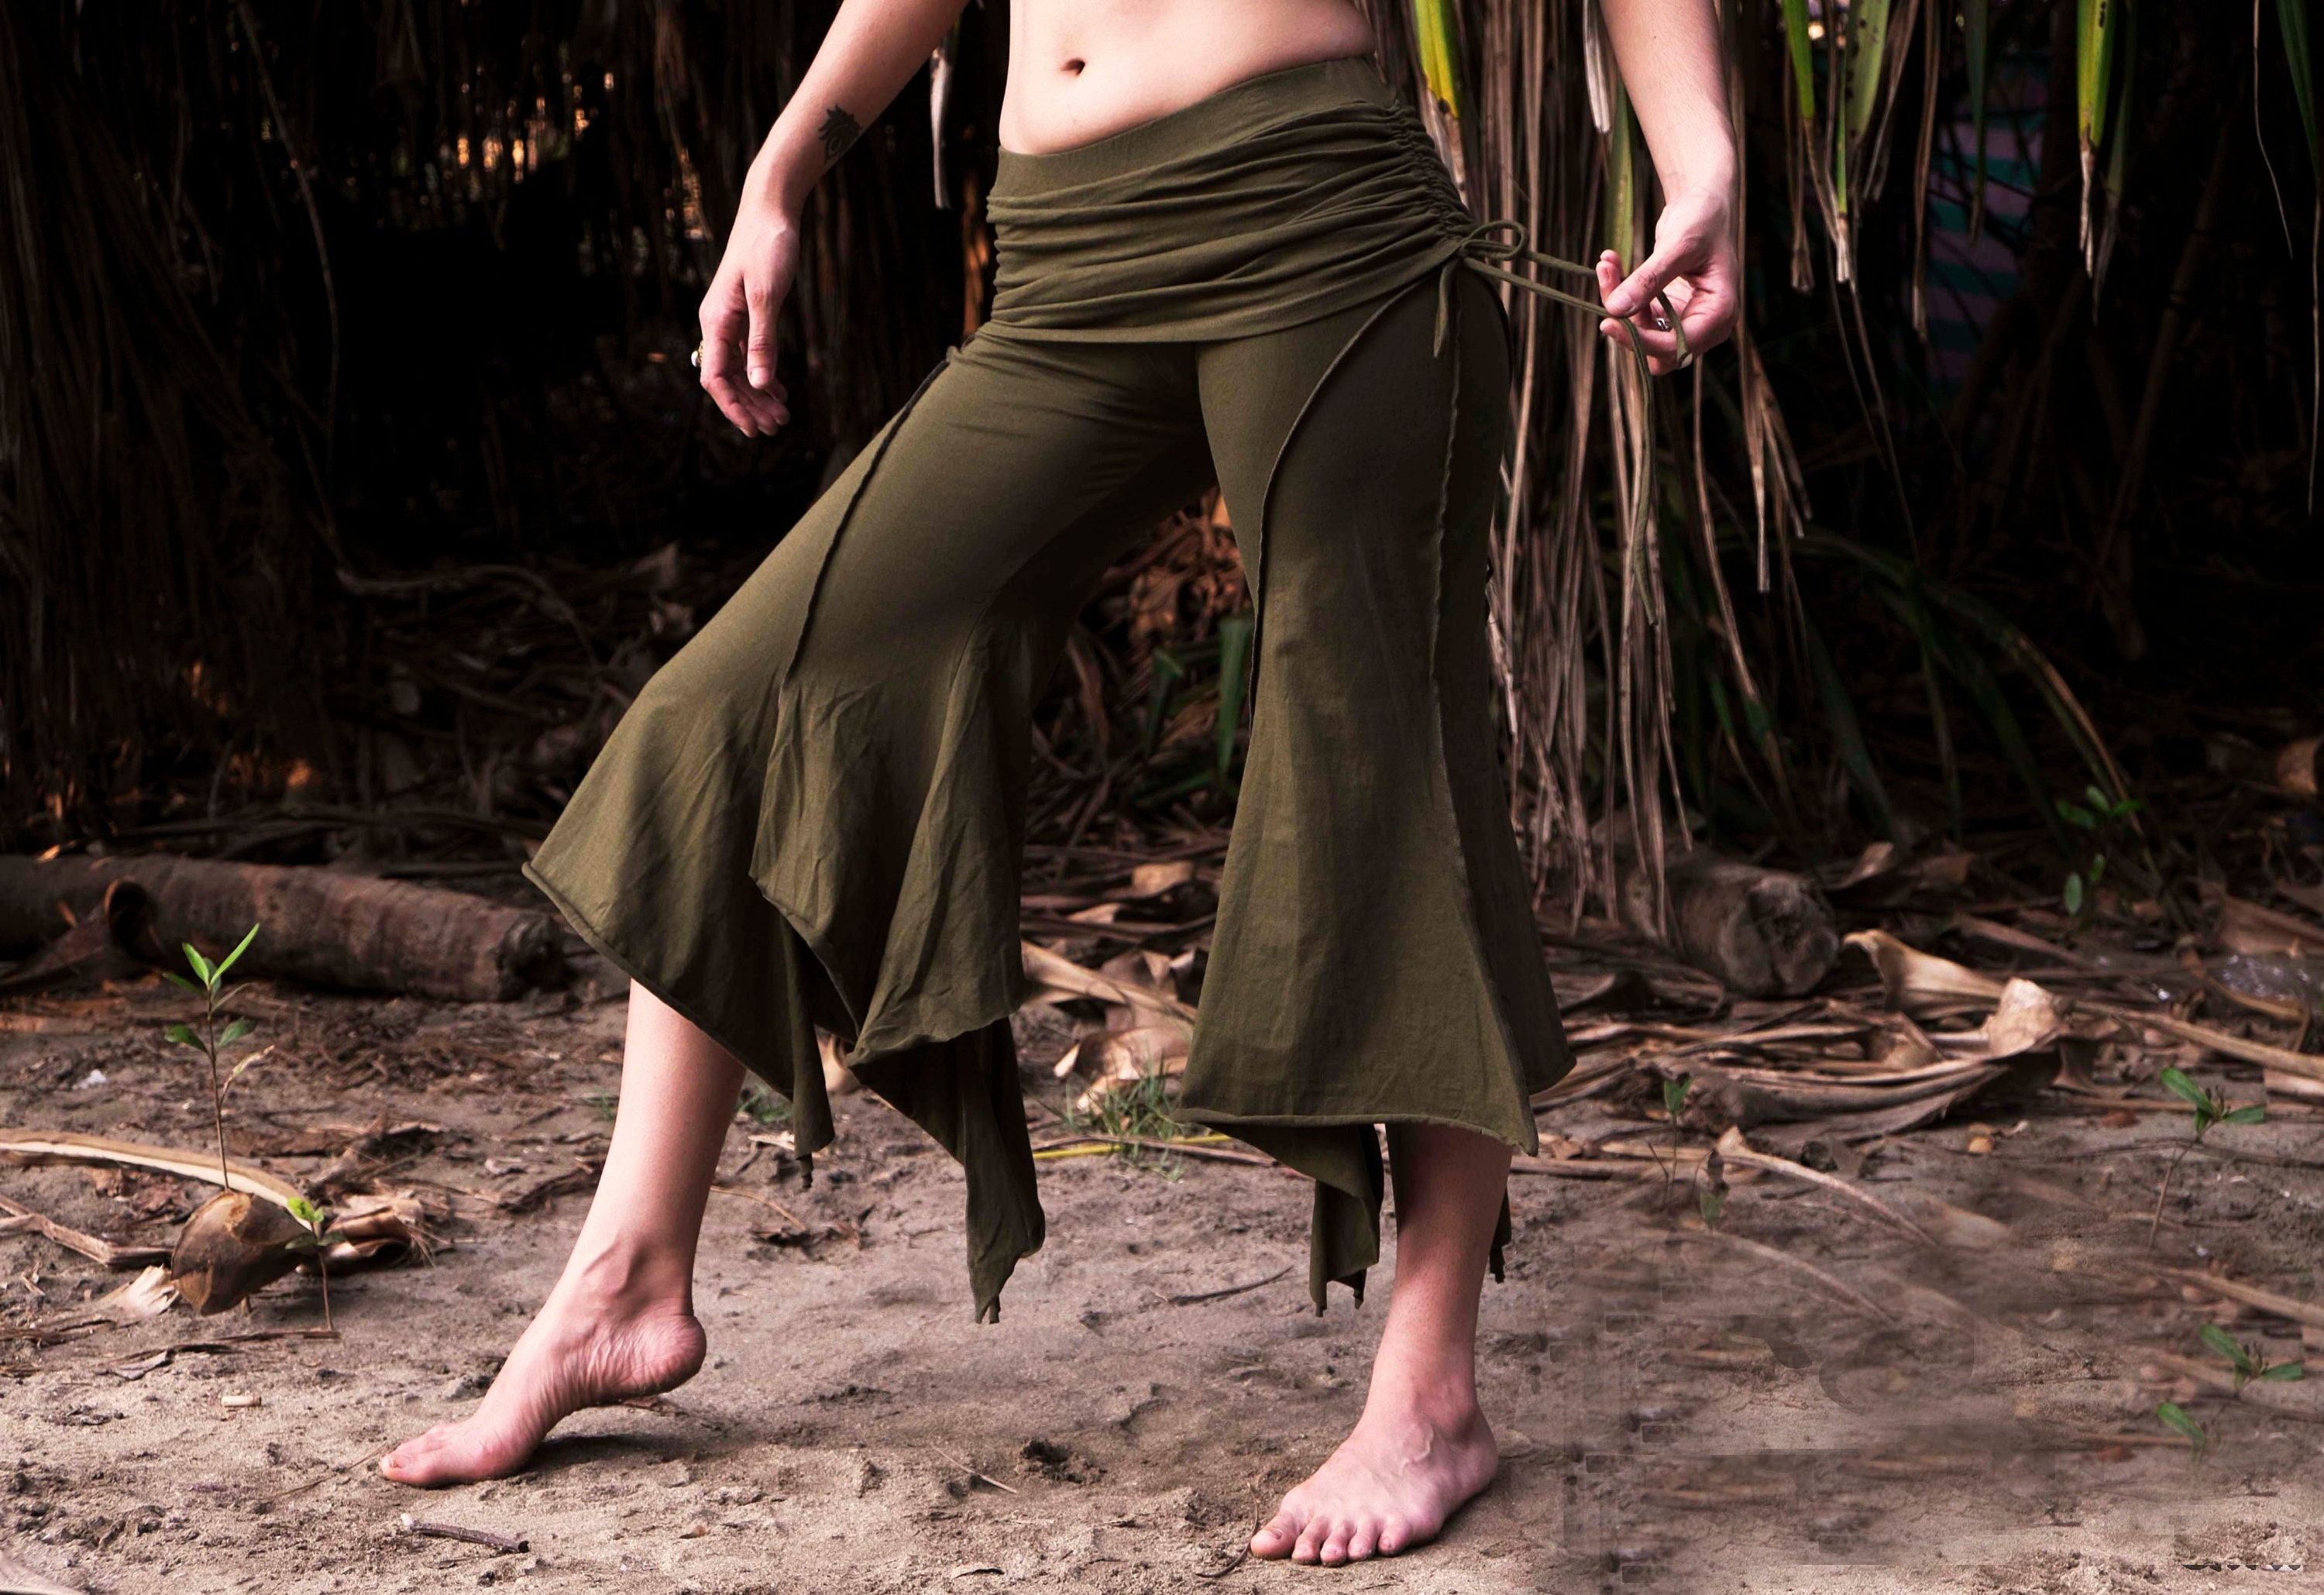 Paisley Hamsa And Indian Elephant Women's Yoga Pants Leggings High Waisted  Workout Pants With Pockets : : Fashion